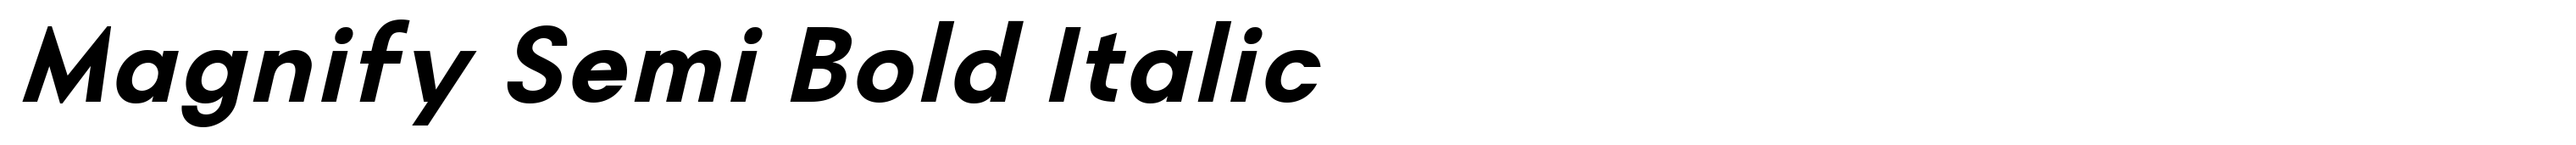 Magnify Semi Bold Italic